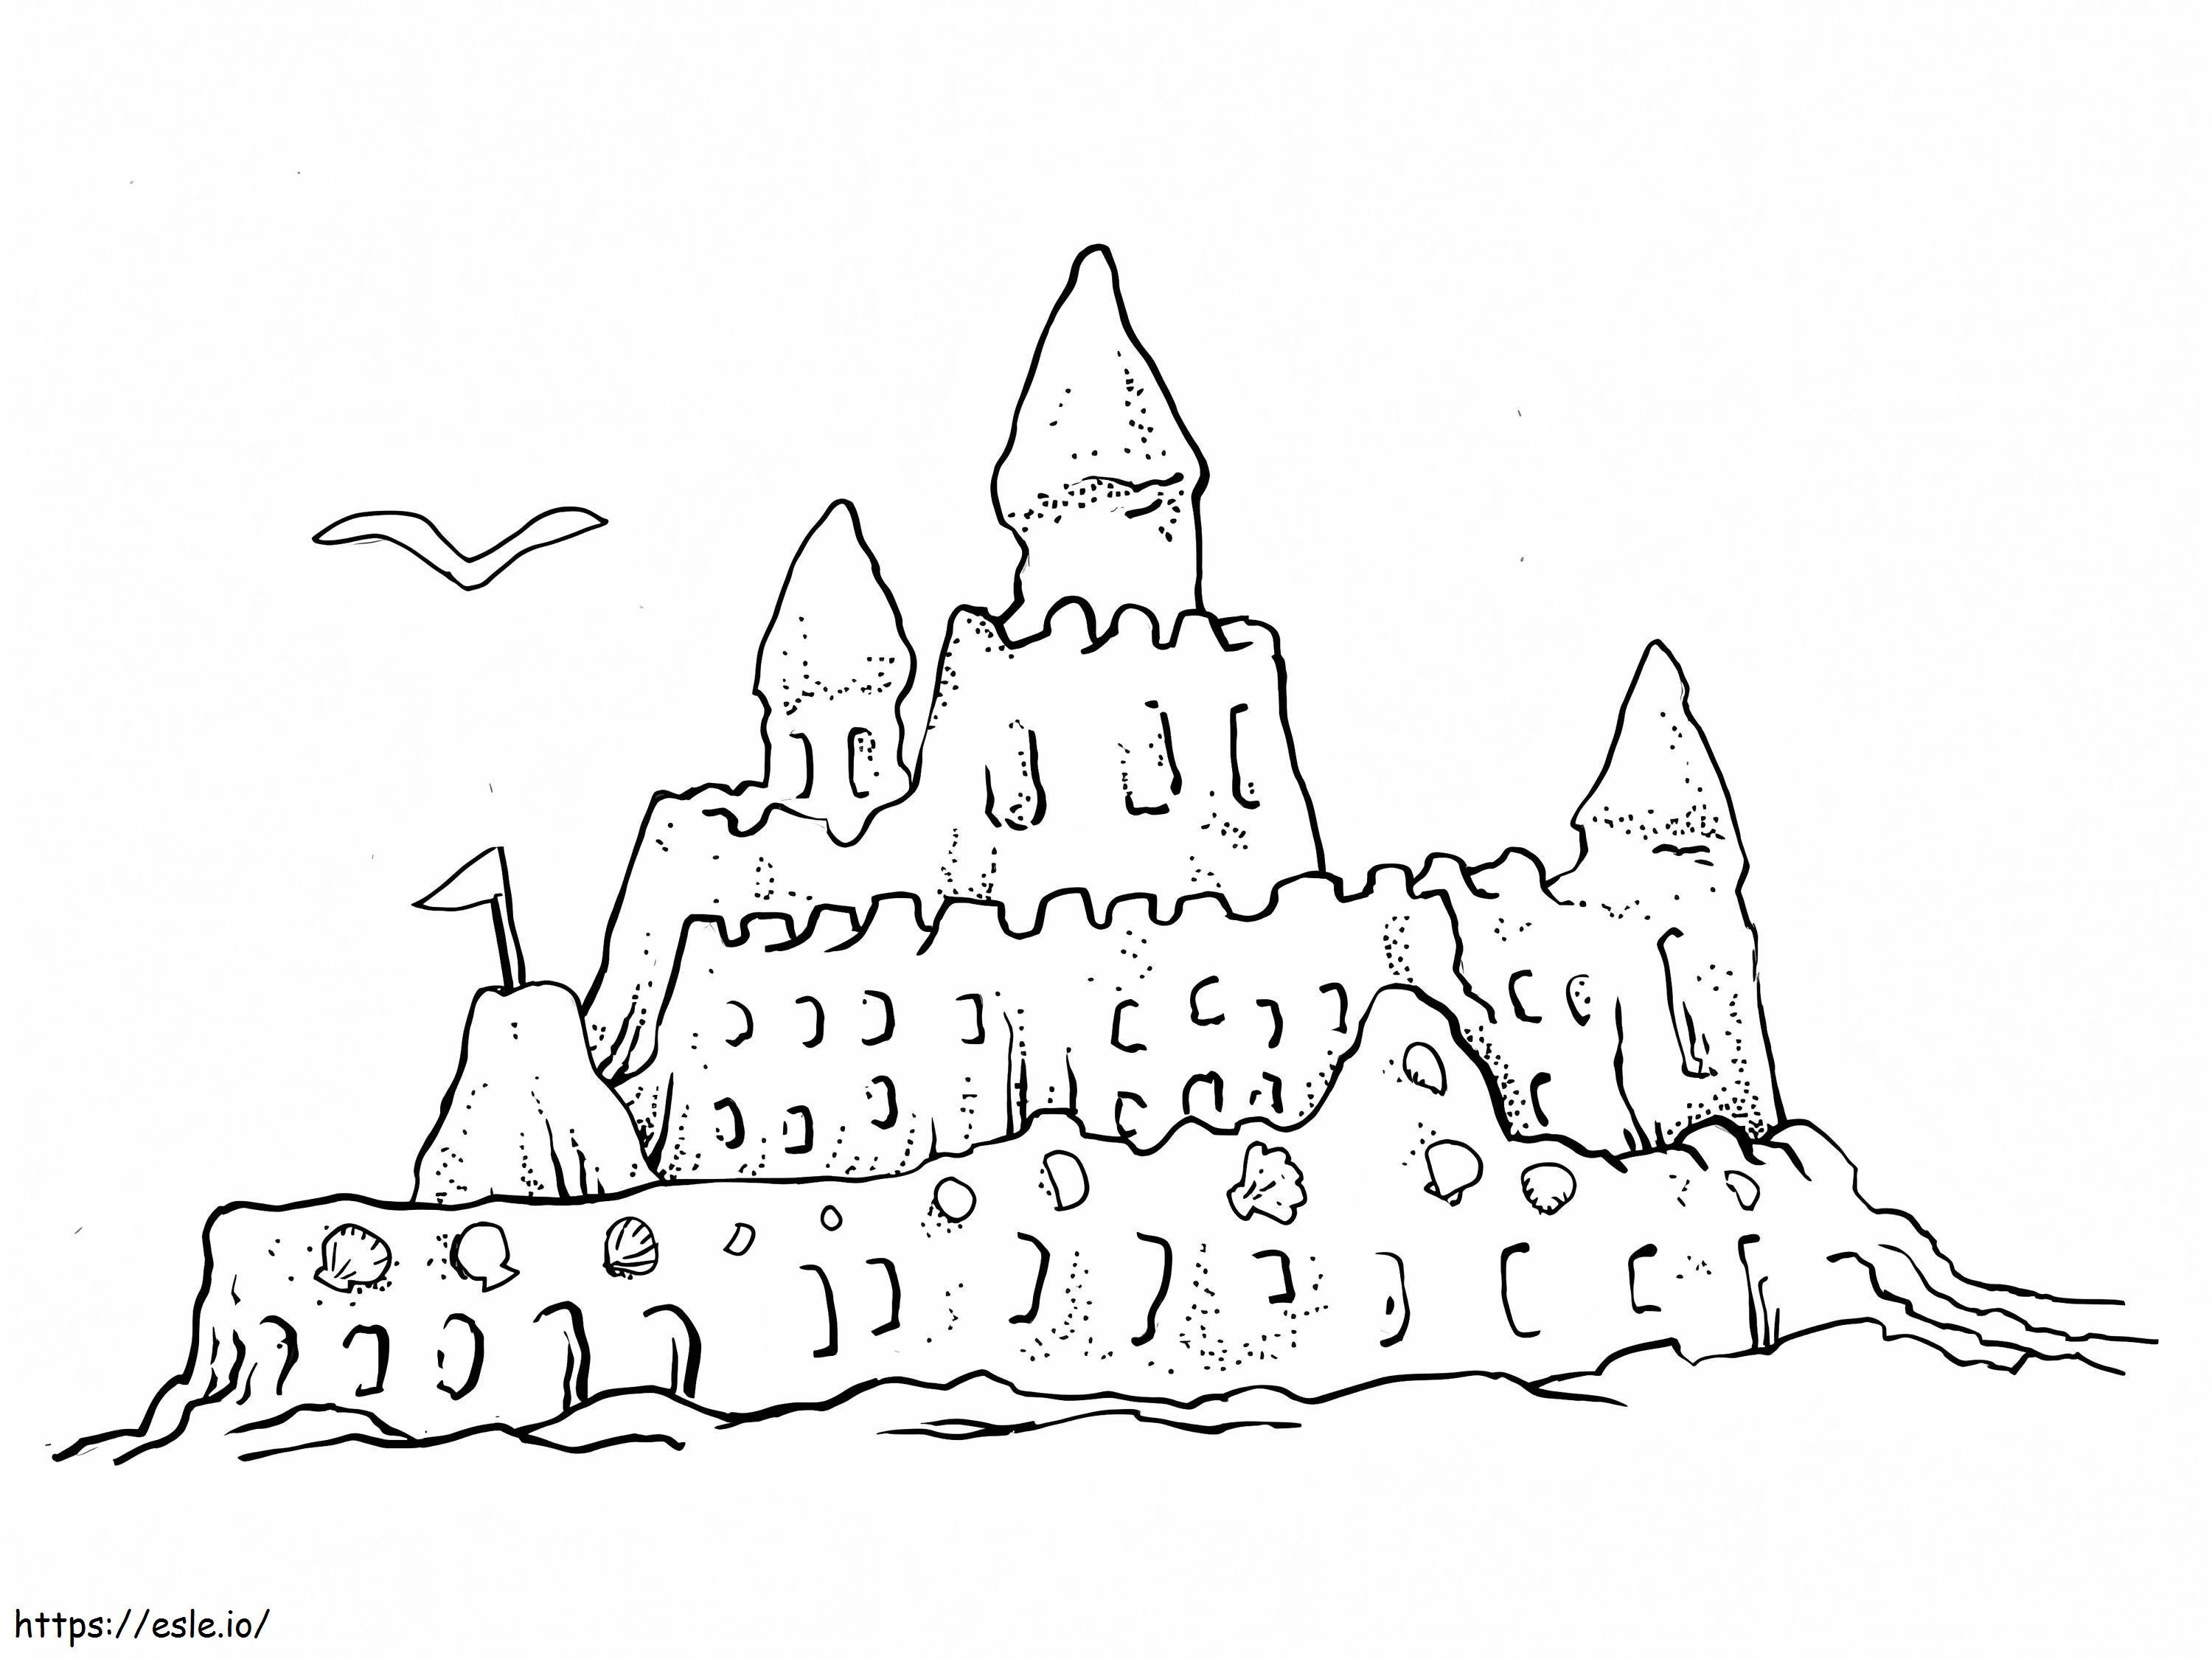 Castelo de areia legal para colorir